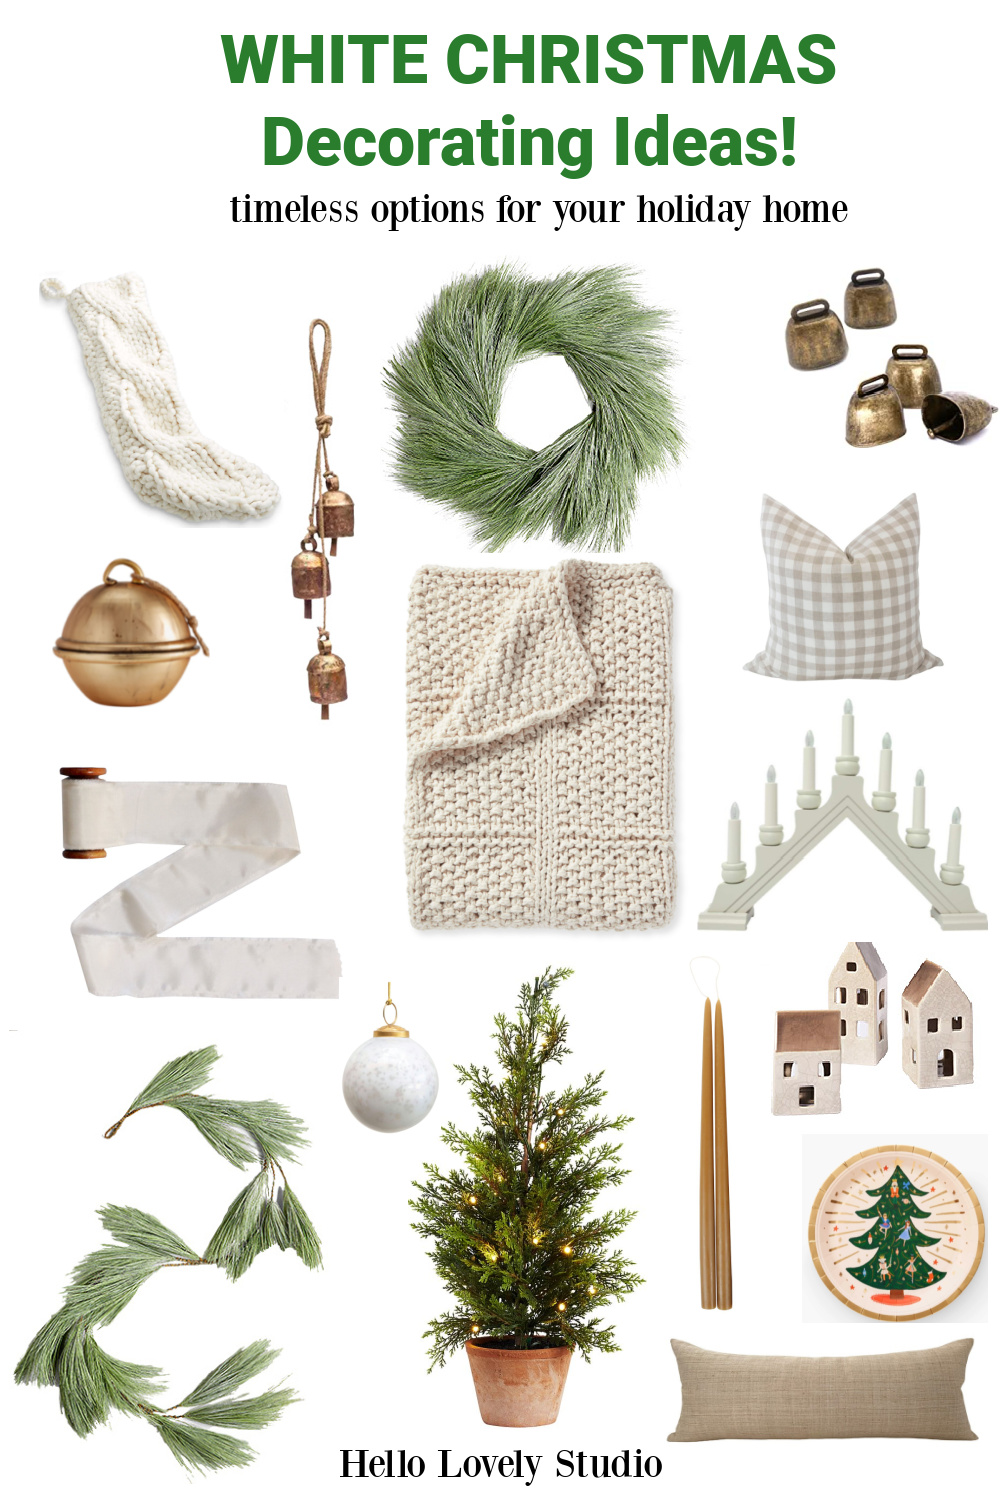 White Christmas Decorating Ideas - Hello Lovely Studio